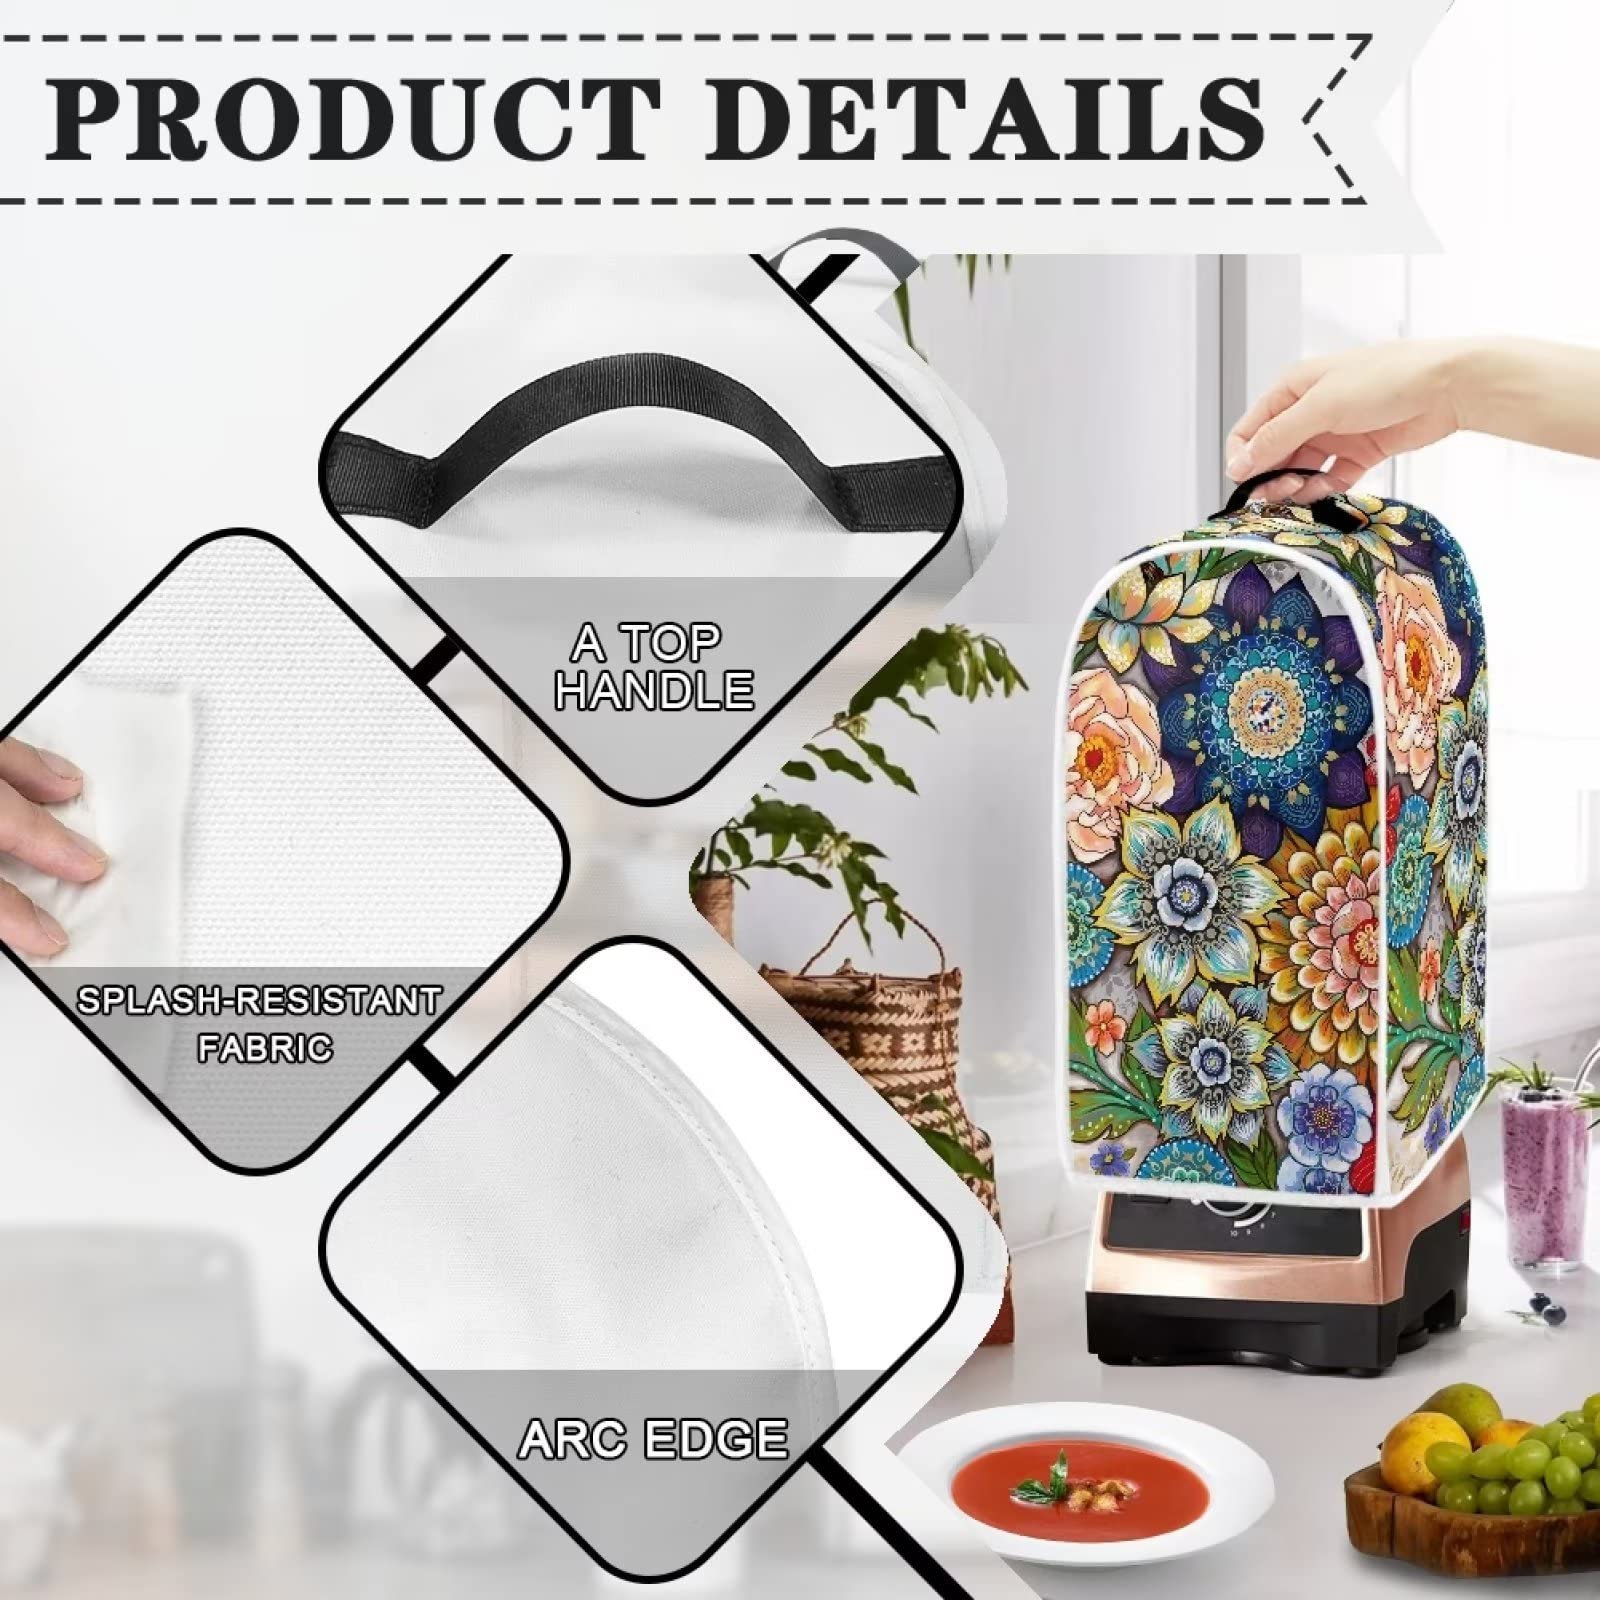 HUISEFOR Blender Covers Kitchen Appliance Dustproof Cover with Handle, Washable Kitchen Universal Food Processor Juicer Coffee Maker Cover, Vintage Mandala Flower